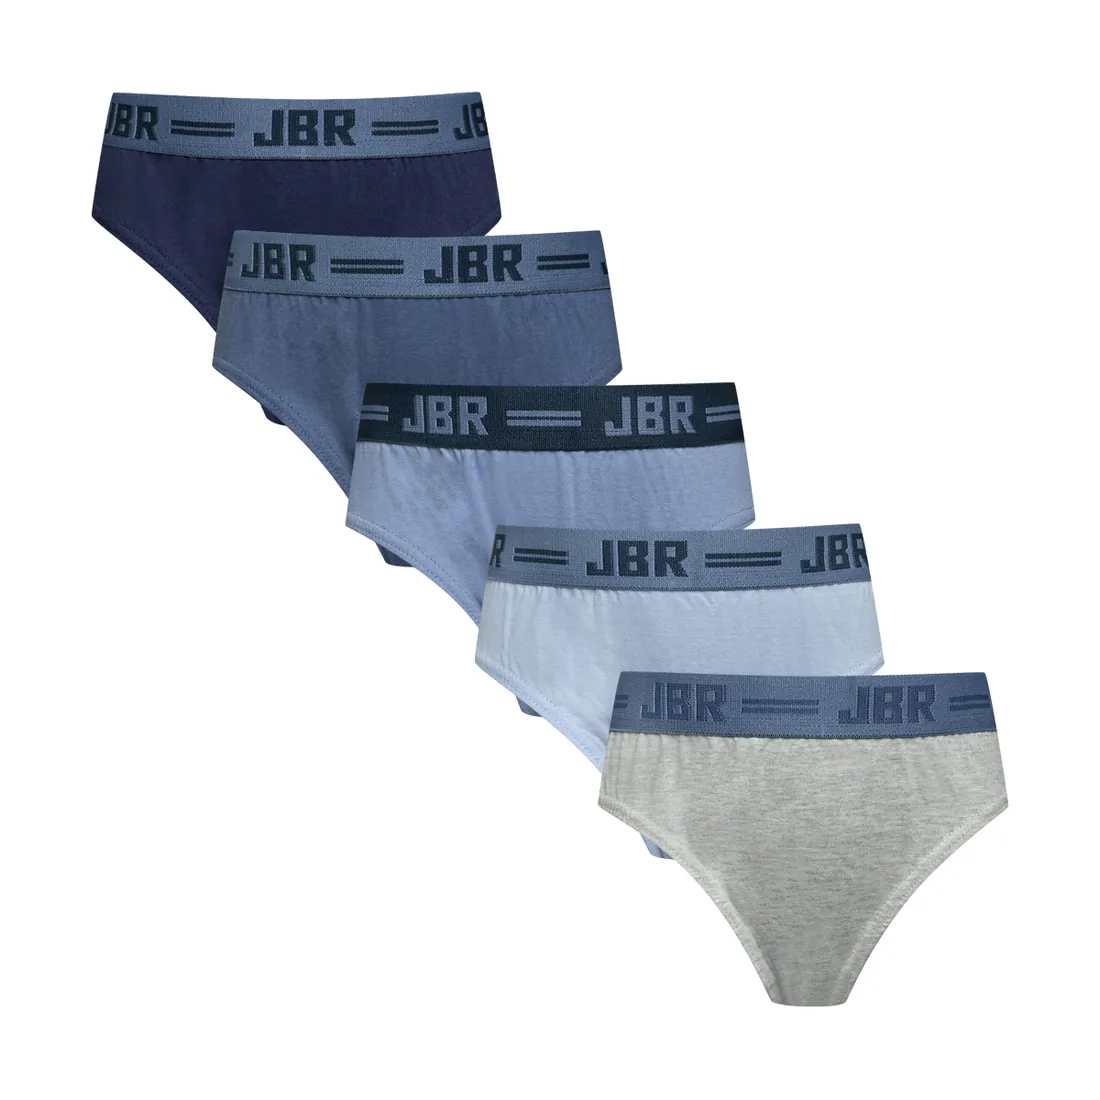 5 Pack comfort briefs blue - Boys 7-15 YEARS Underwear & Socks | Ackermans